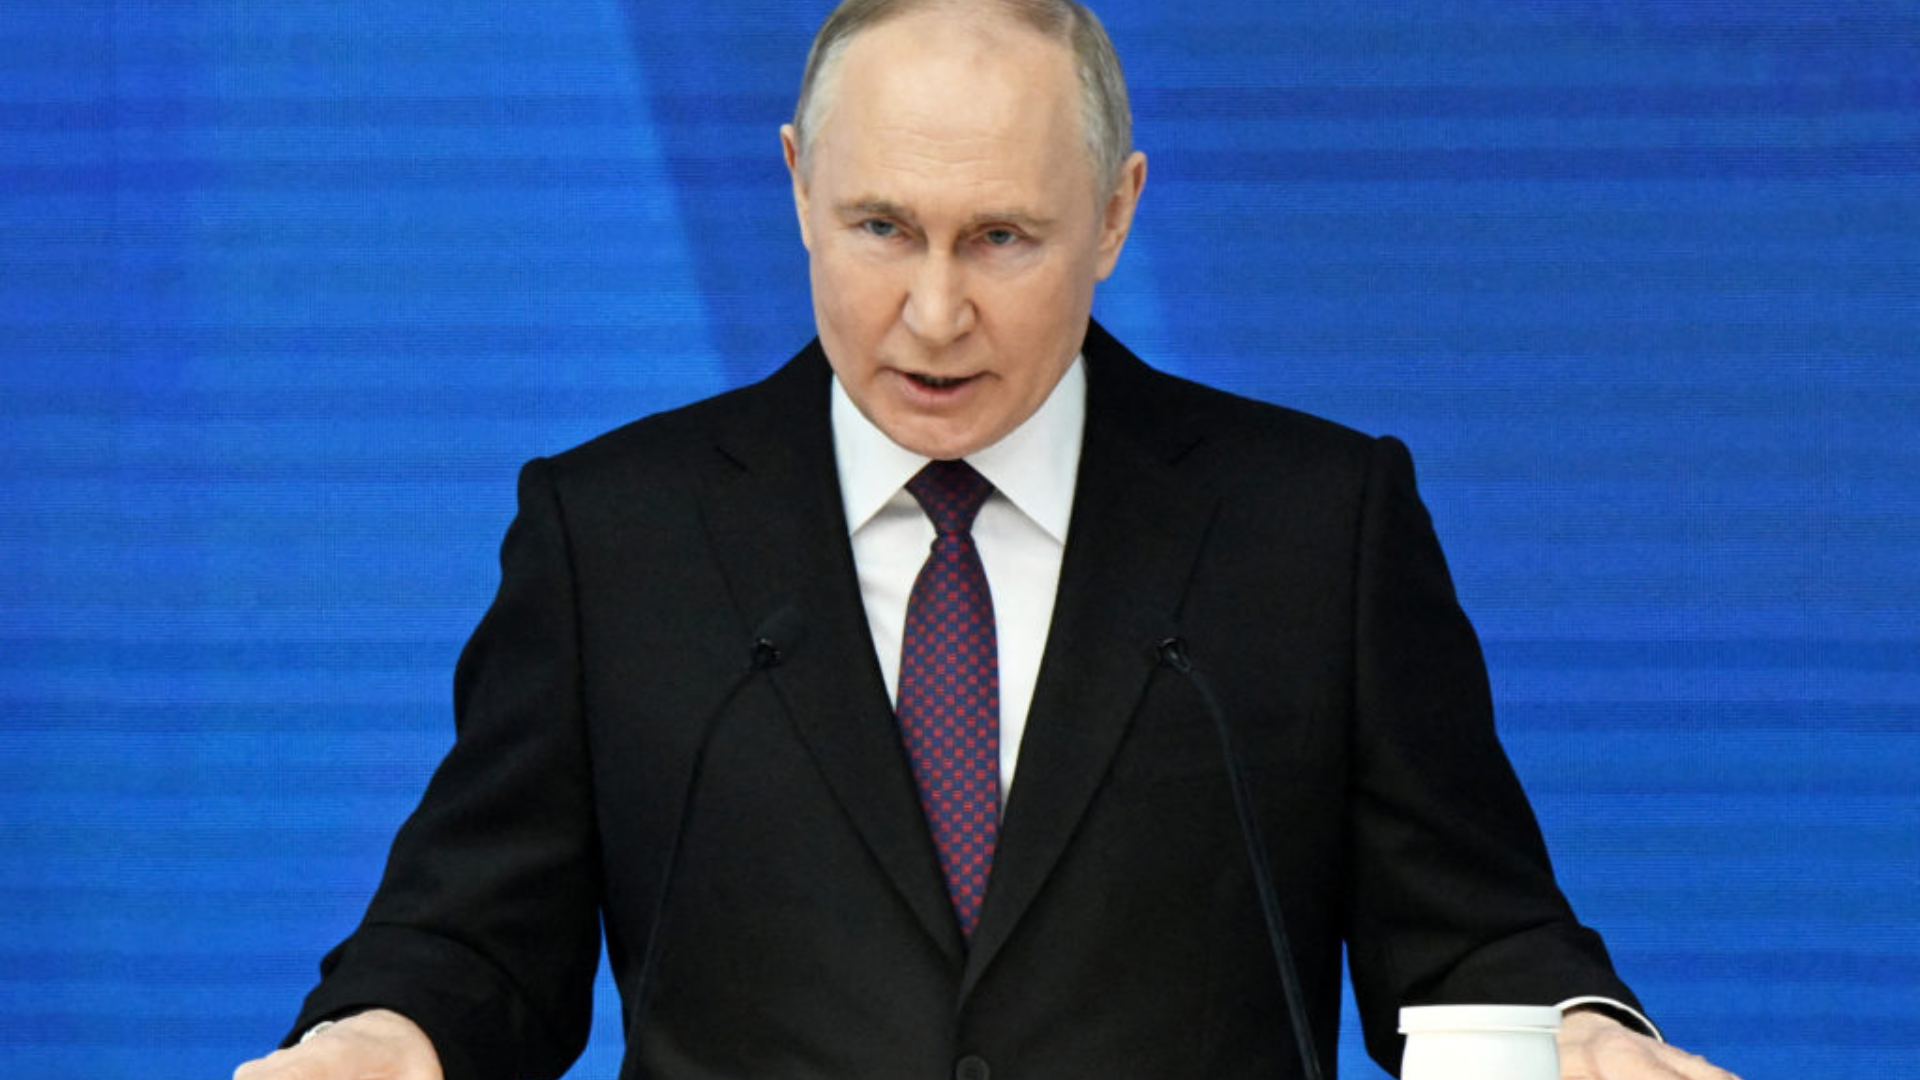 Putin Vows to Safeguard Russia's Future, Emphasizes Sovereignty